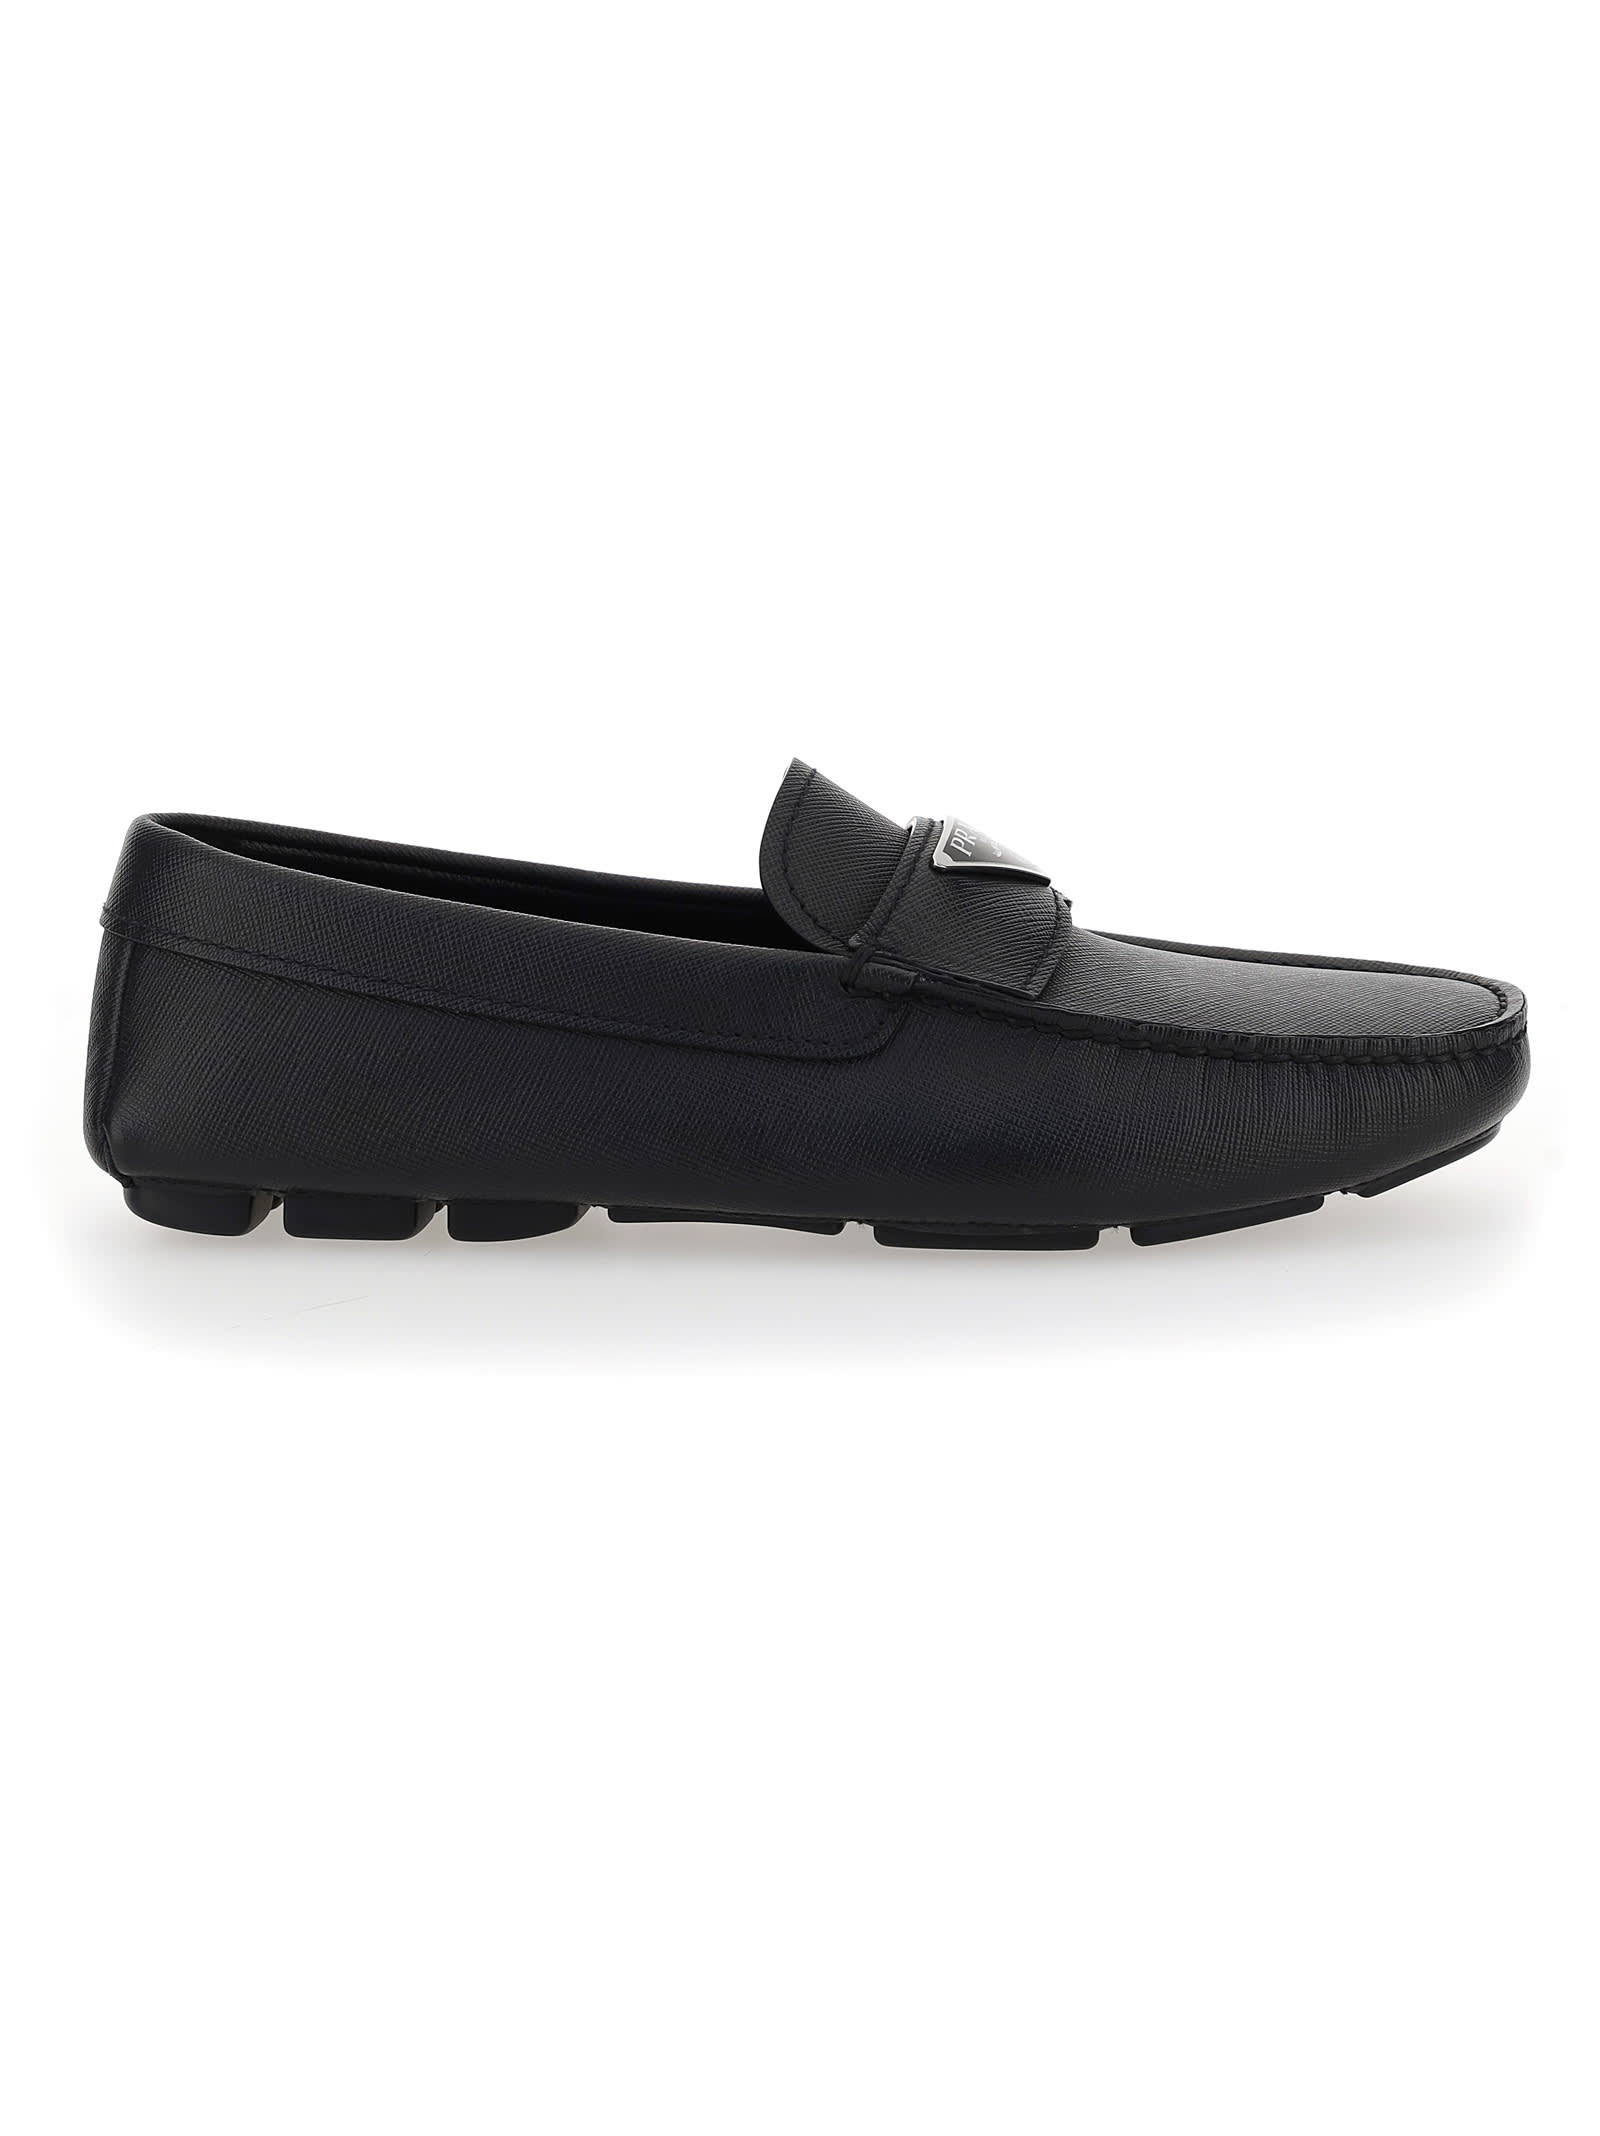 Prada Mens Black Leather Loafers